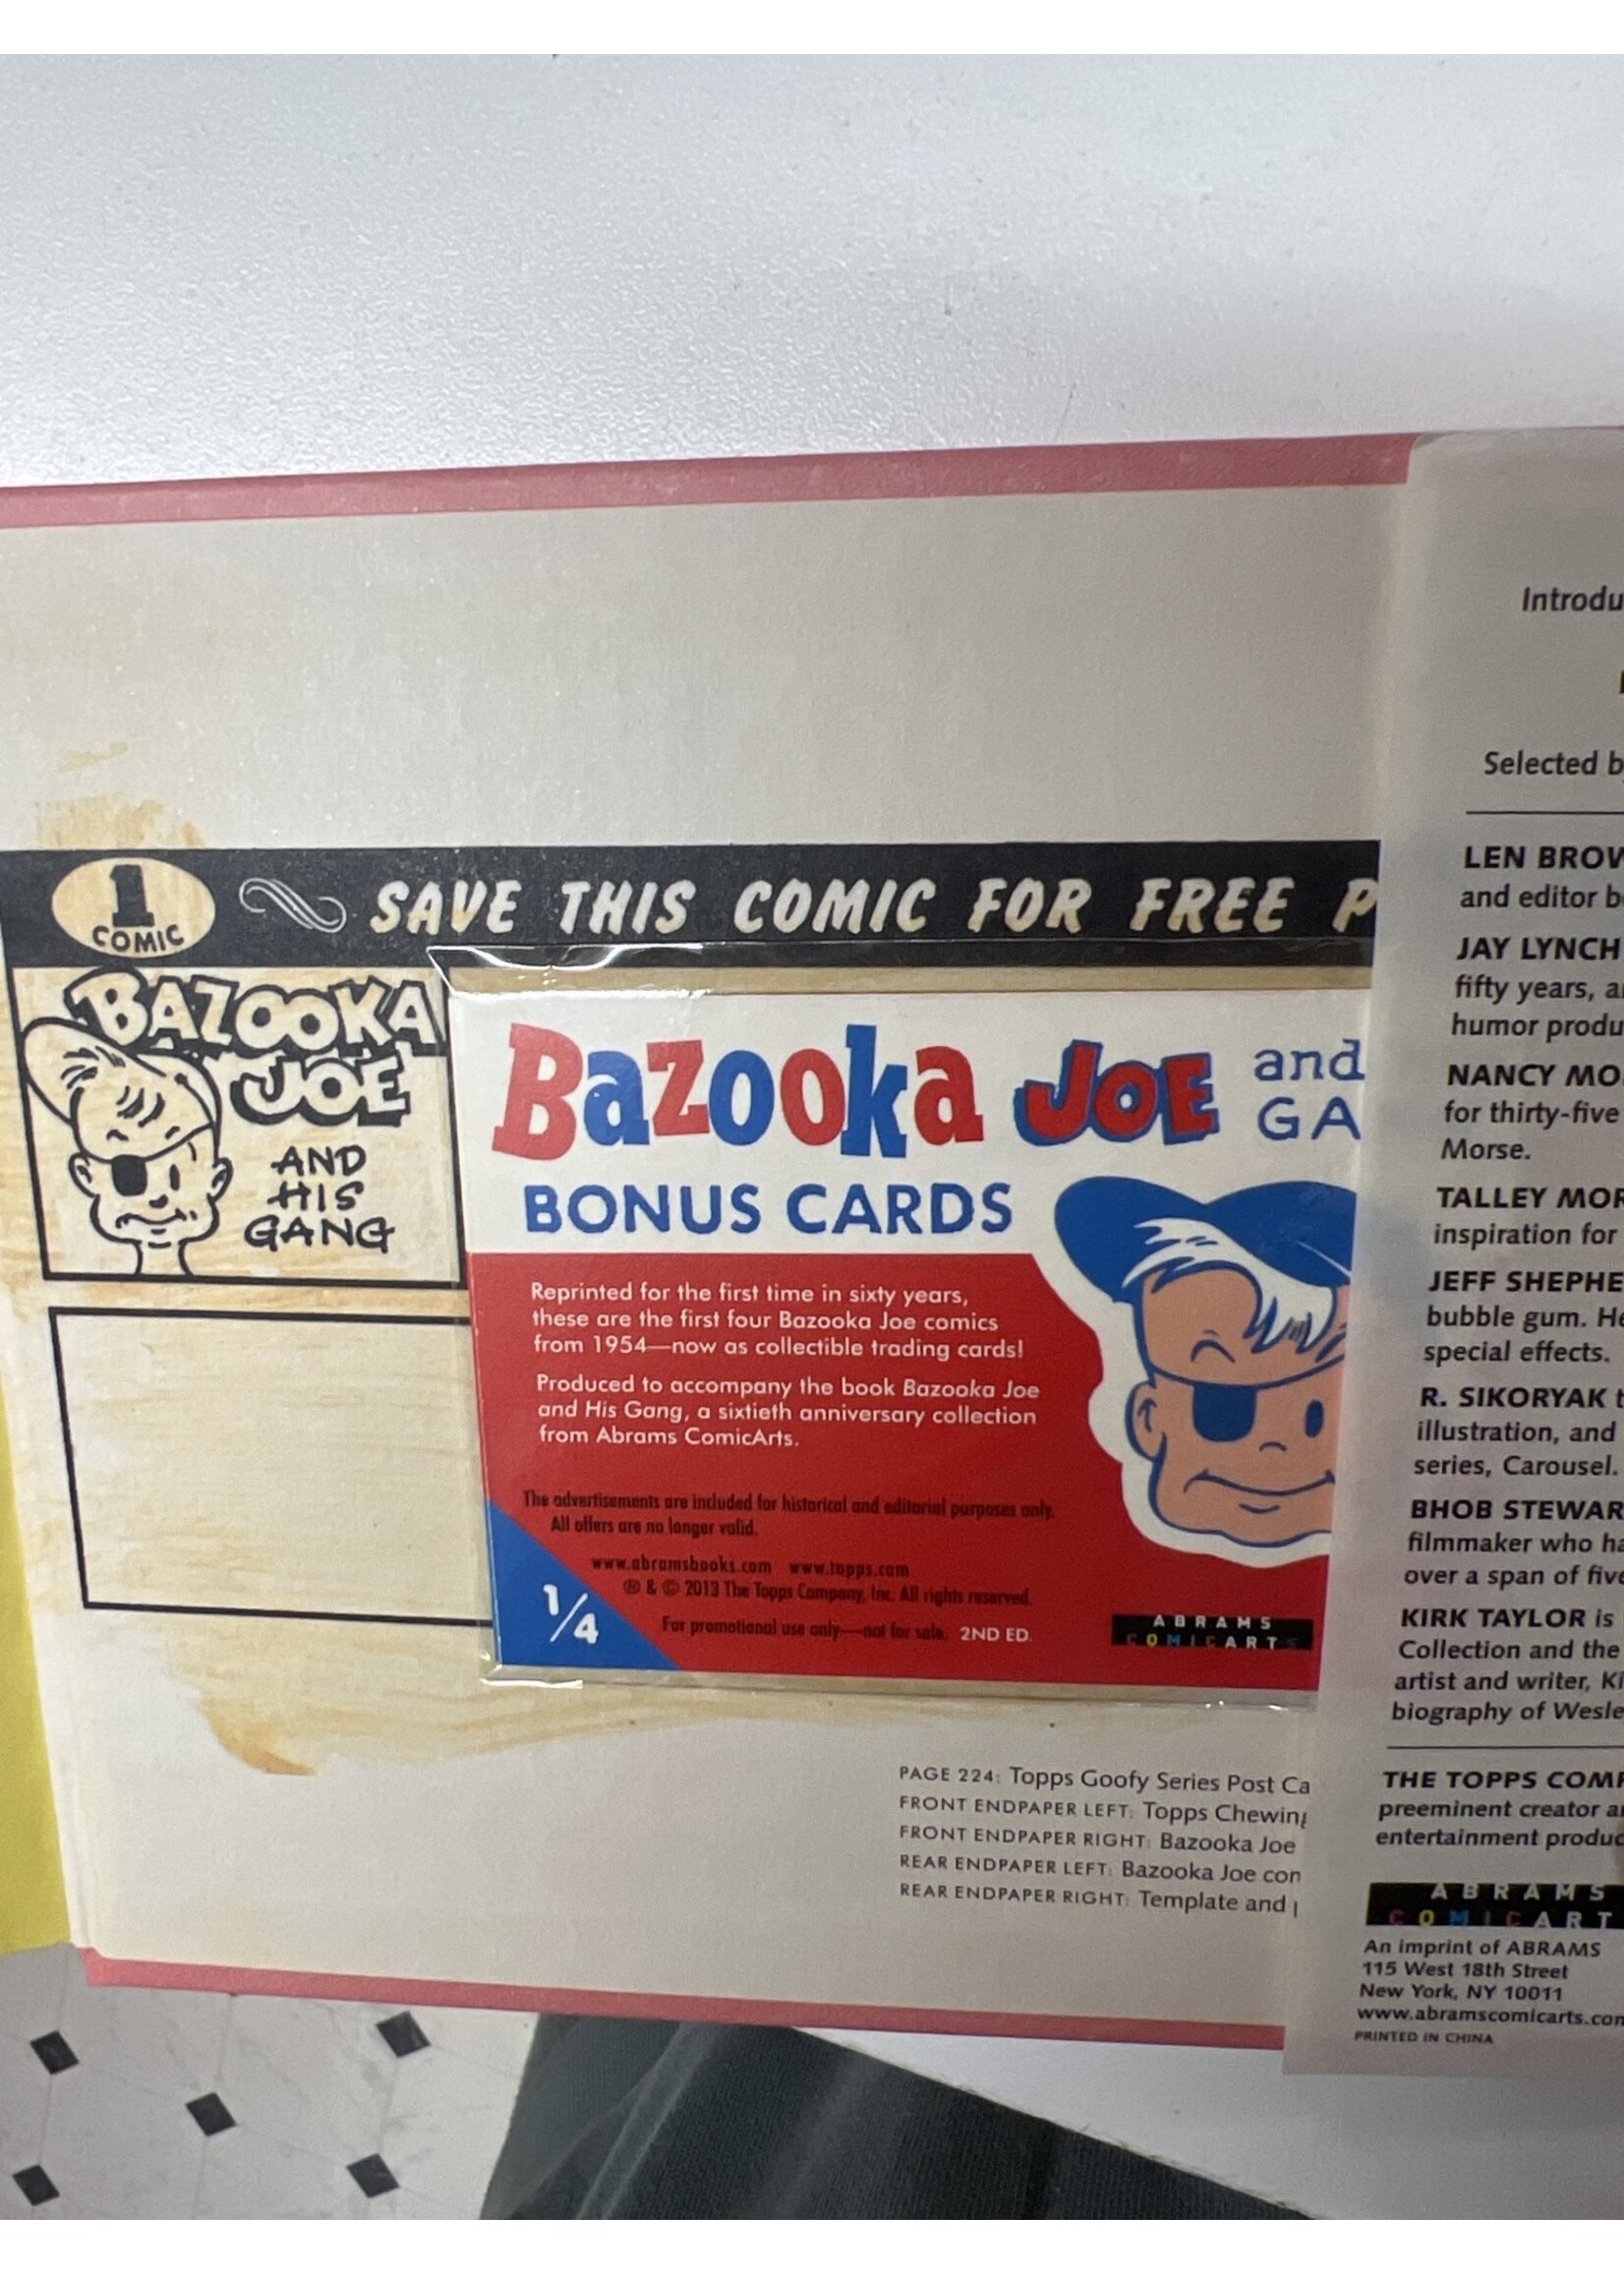 Bazooka Joe- Topps 60th Anniversary Collection Book w/ one bonus pack of cards